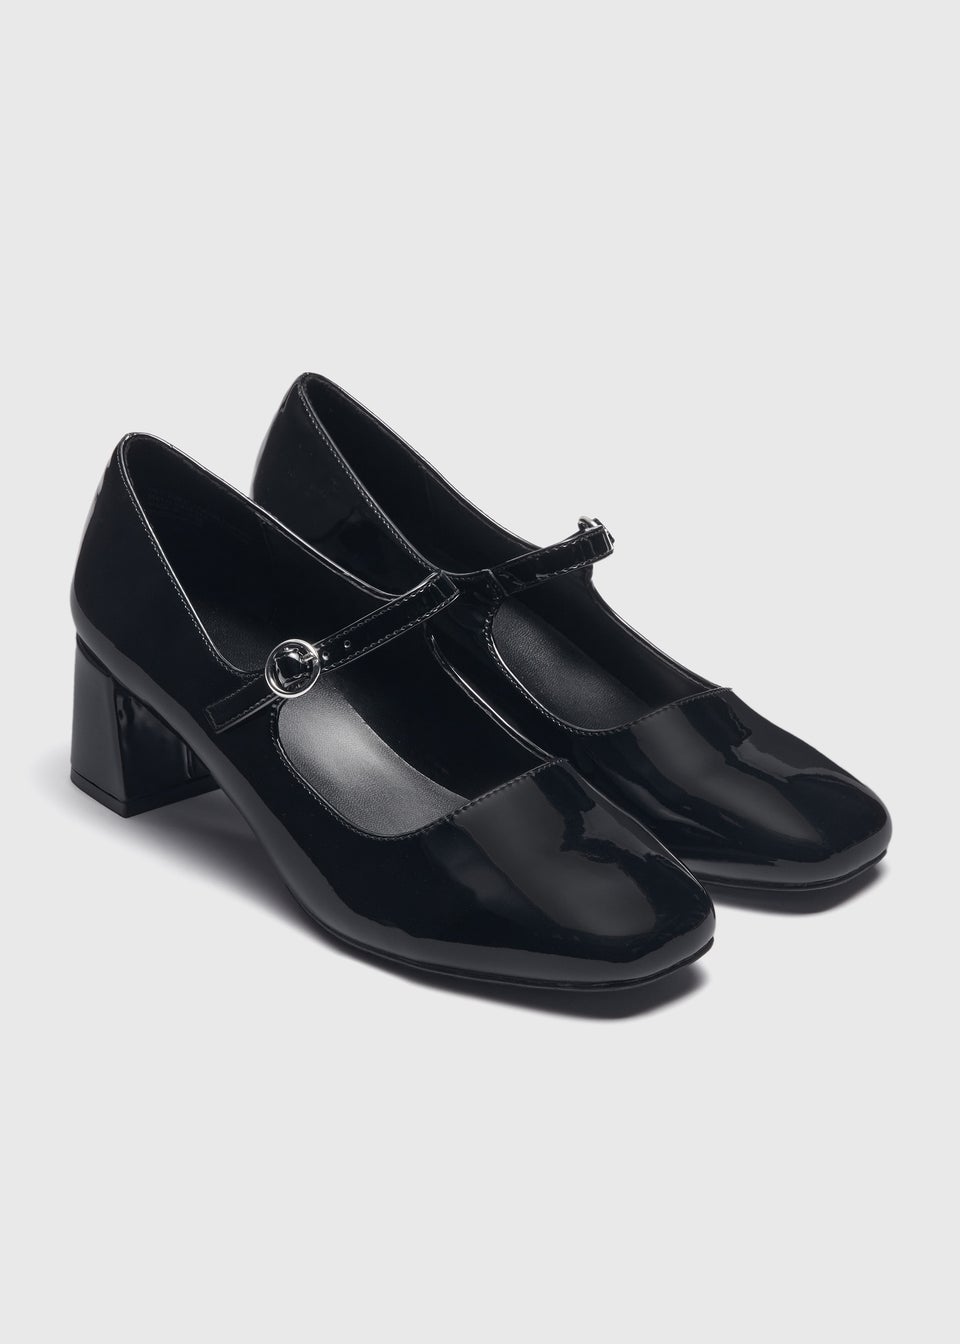 Black T-Strap Vintage Mary Jane Kitten Heels – Unique Vintage